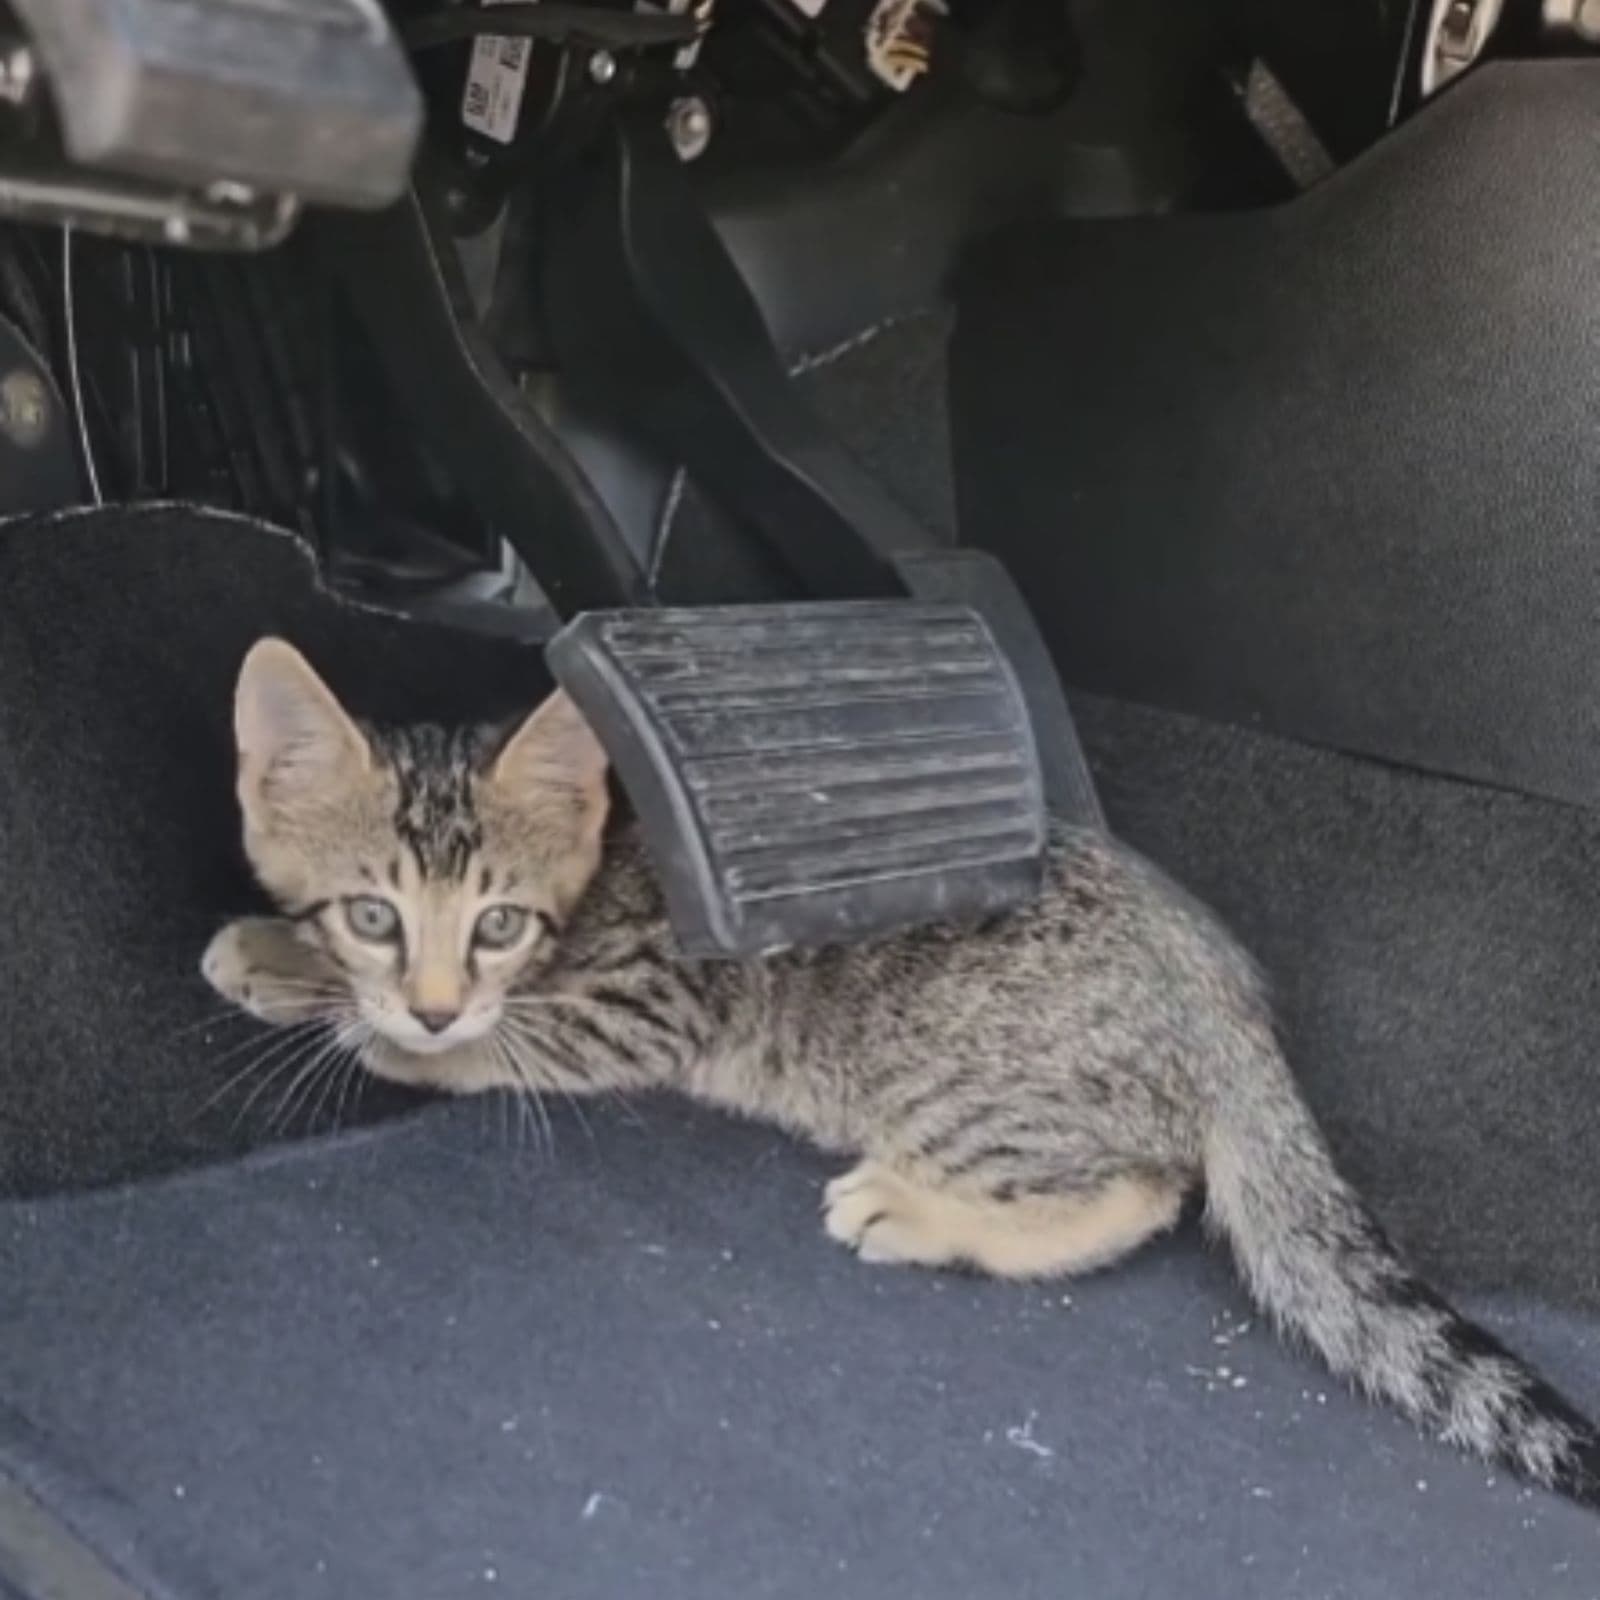 the kitten is hiding under the car brake